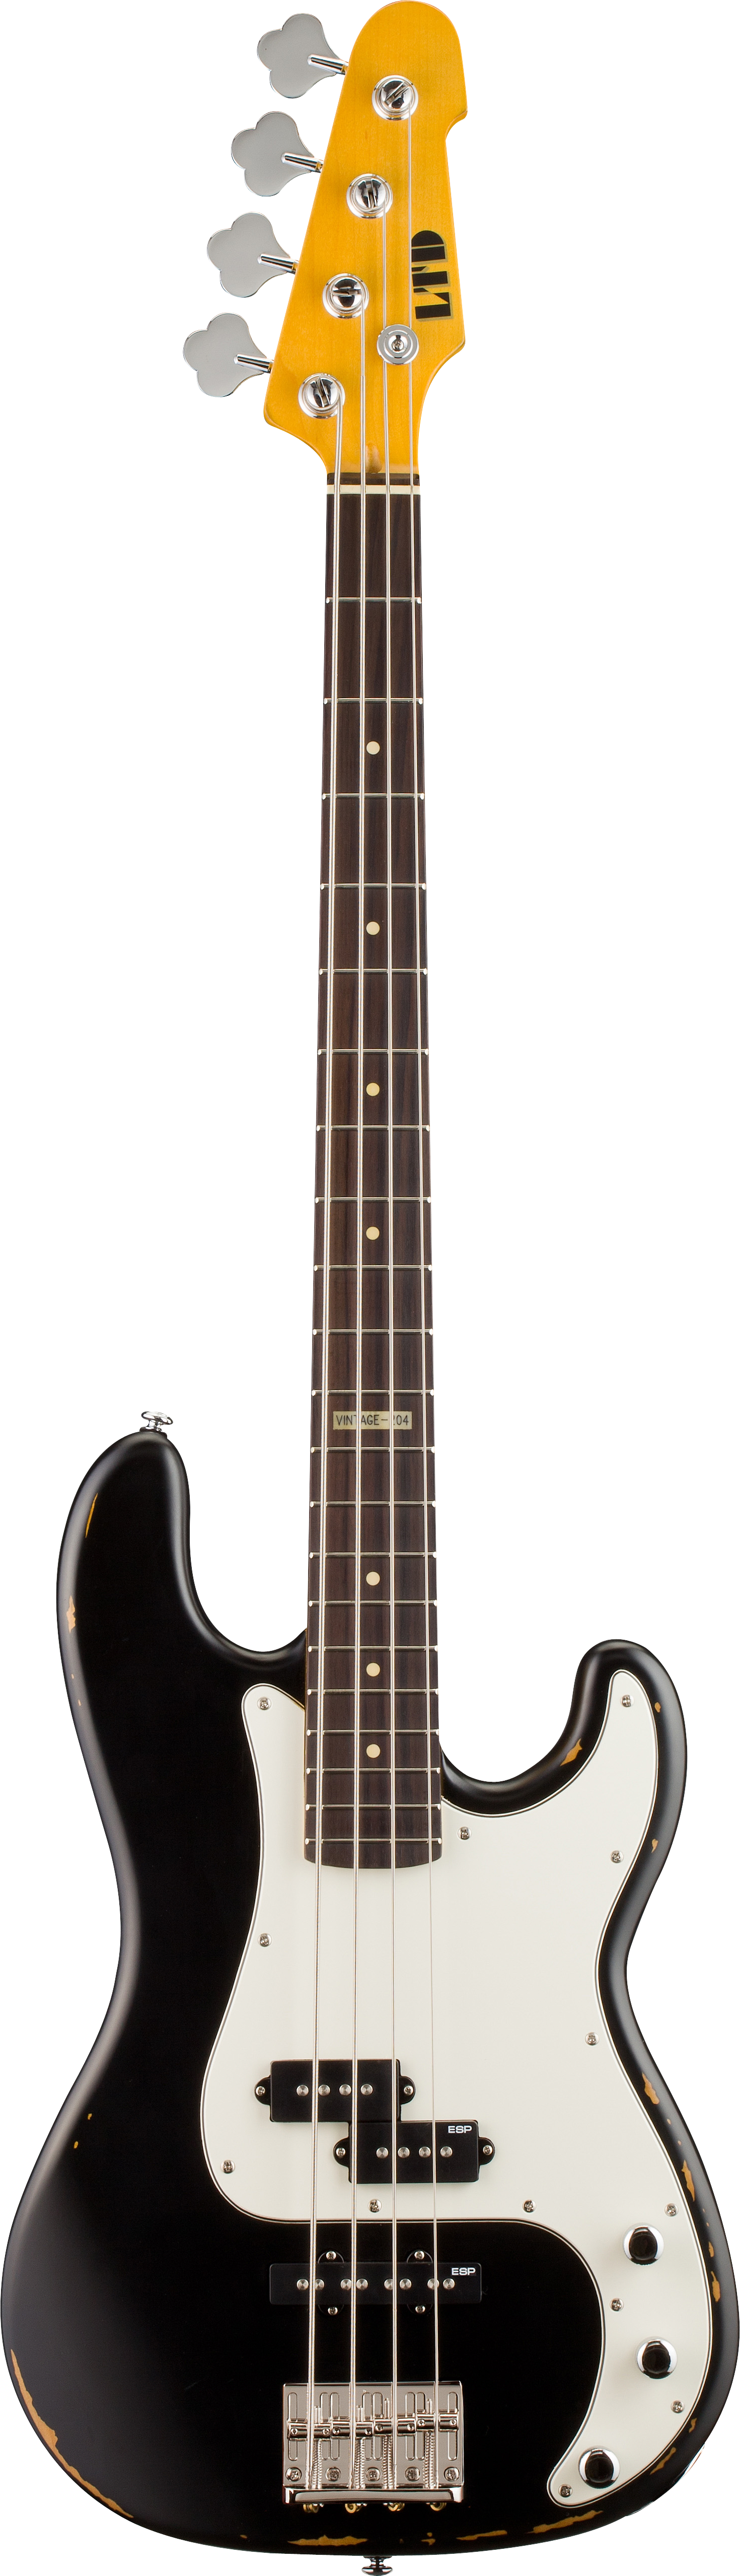 Electric Guitar Png - Esp Ltd P Bass (1470x5115)